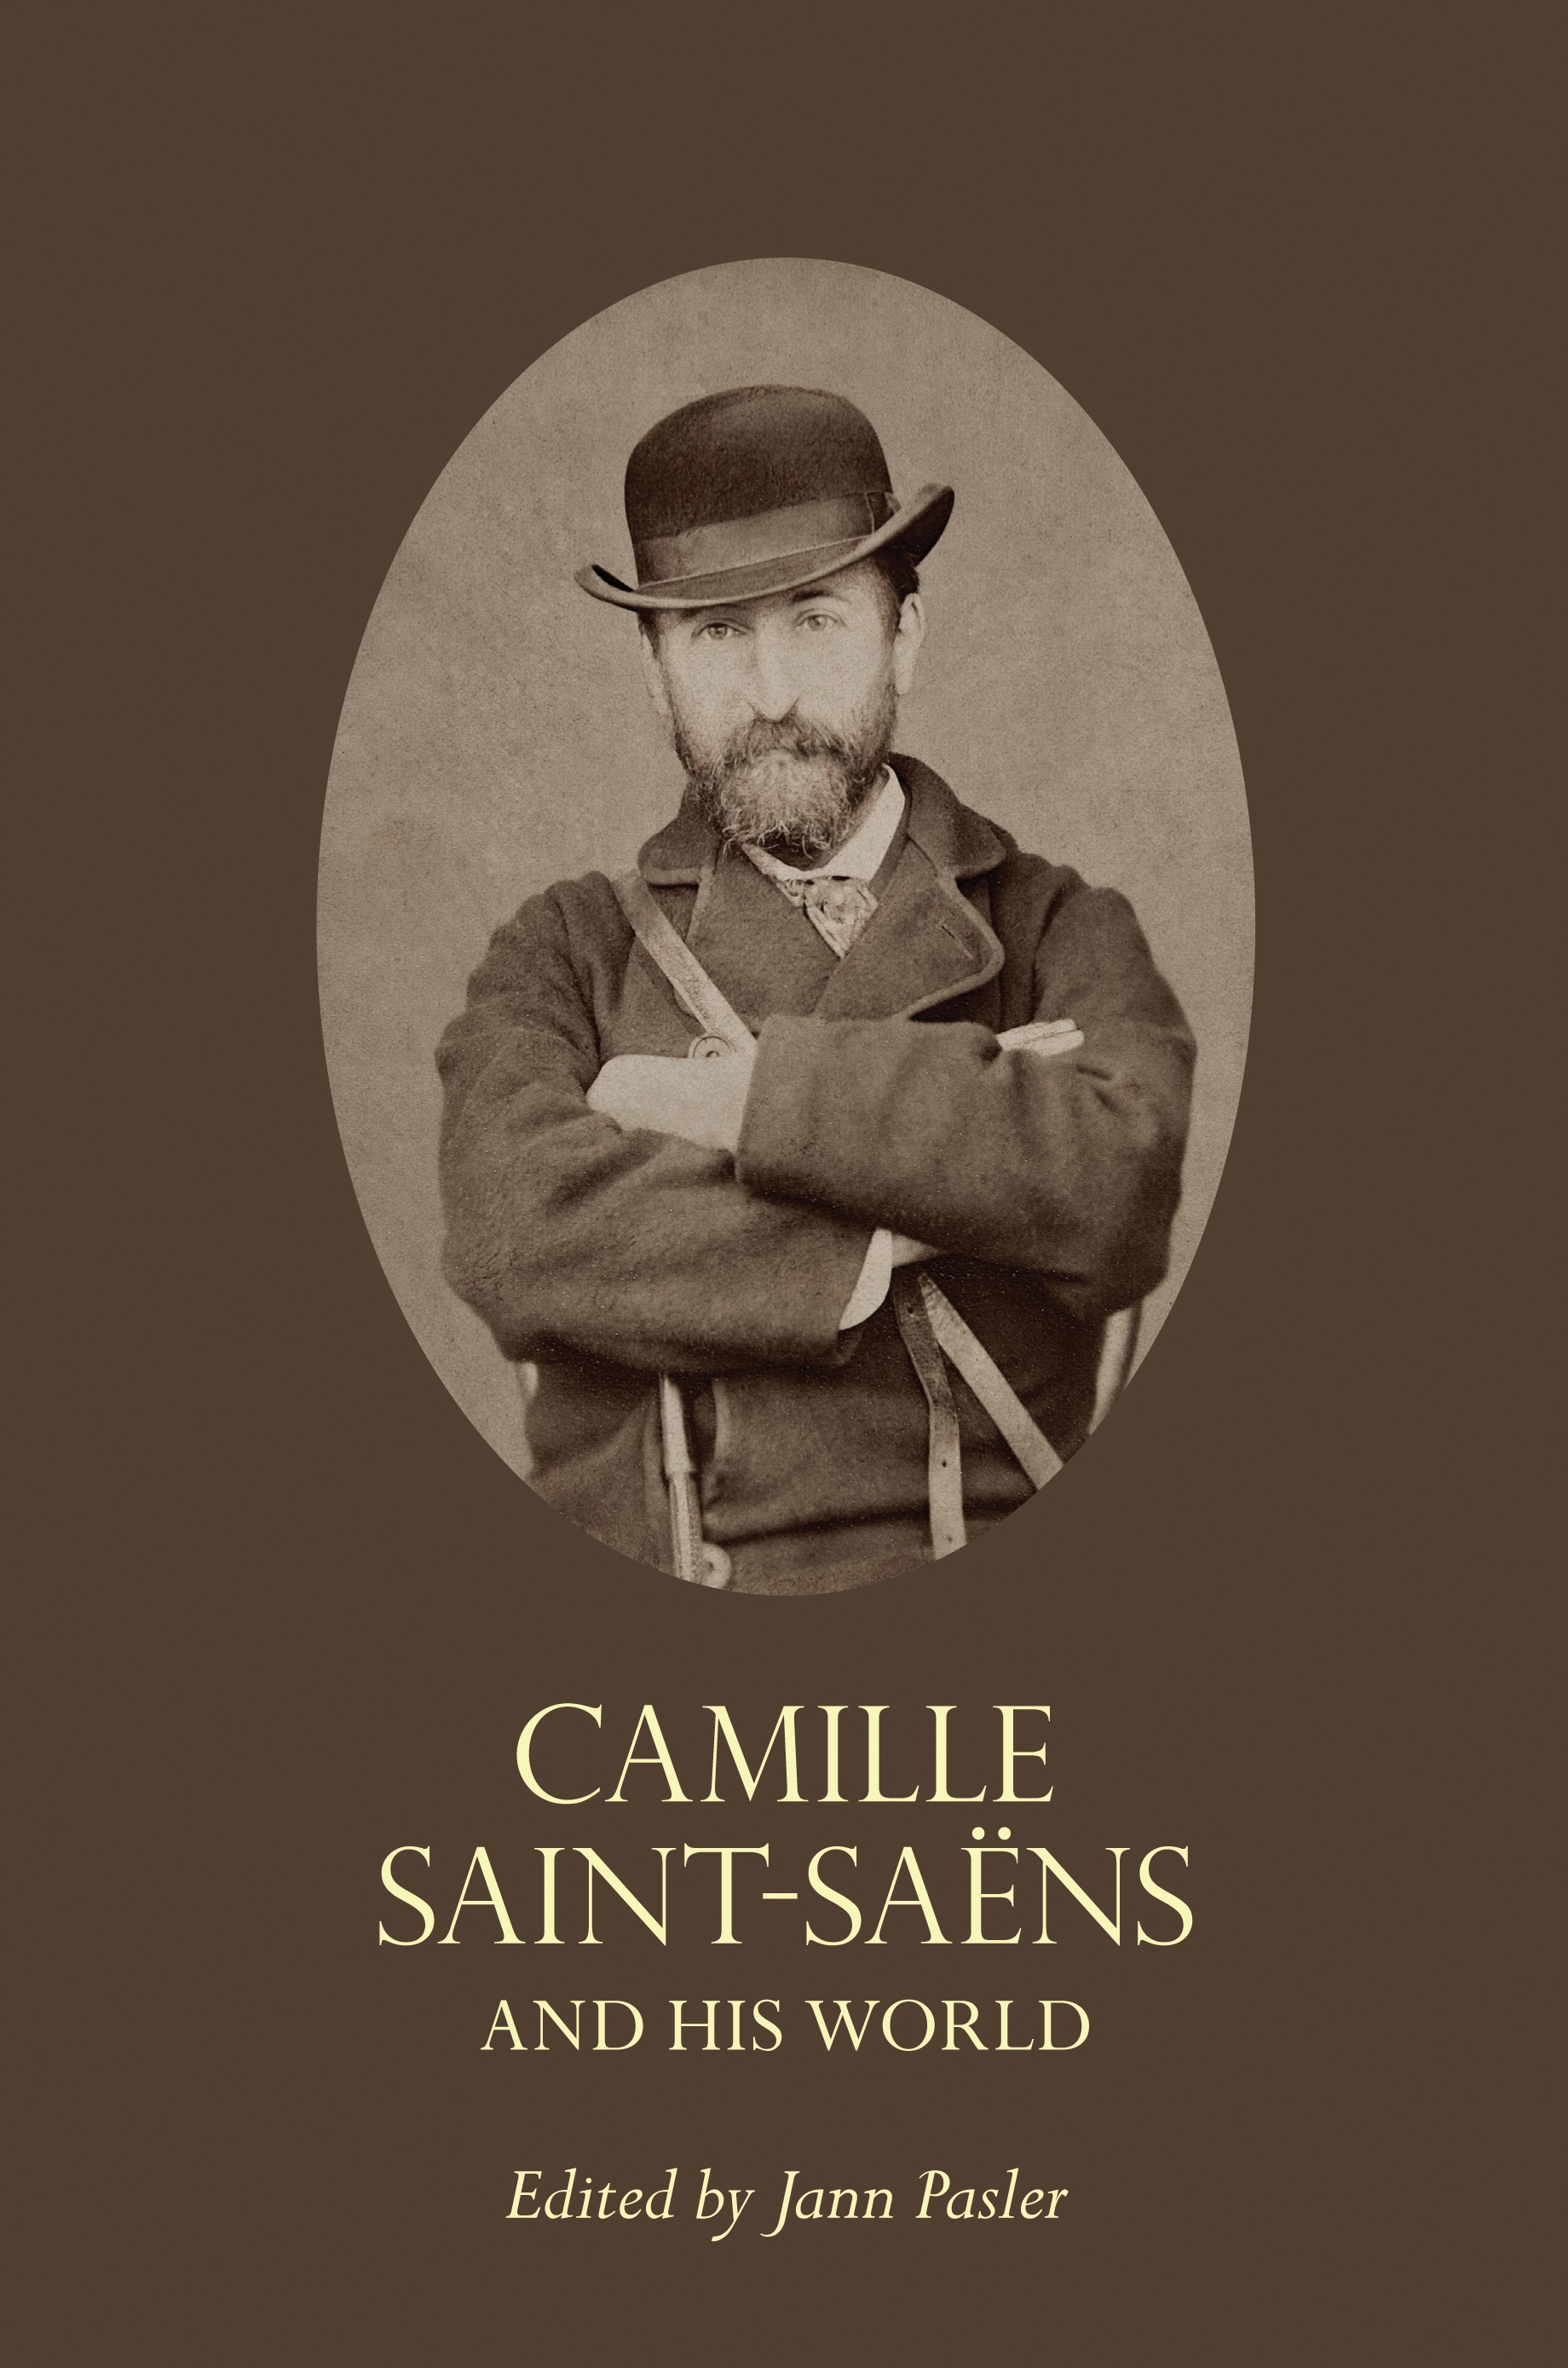 Camille Saint-Saëns Discography